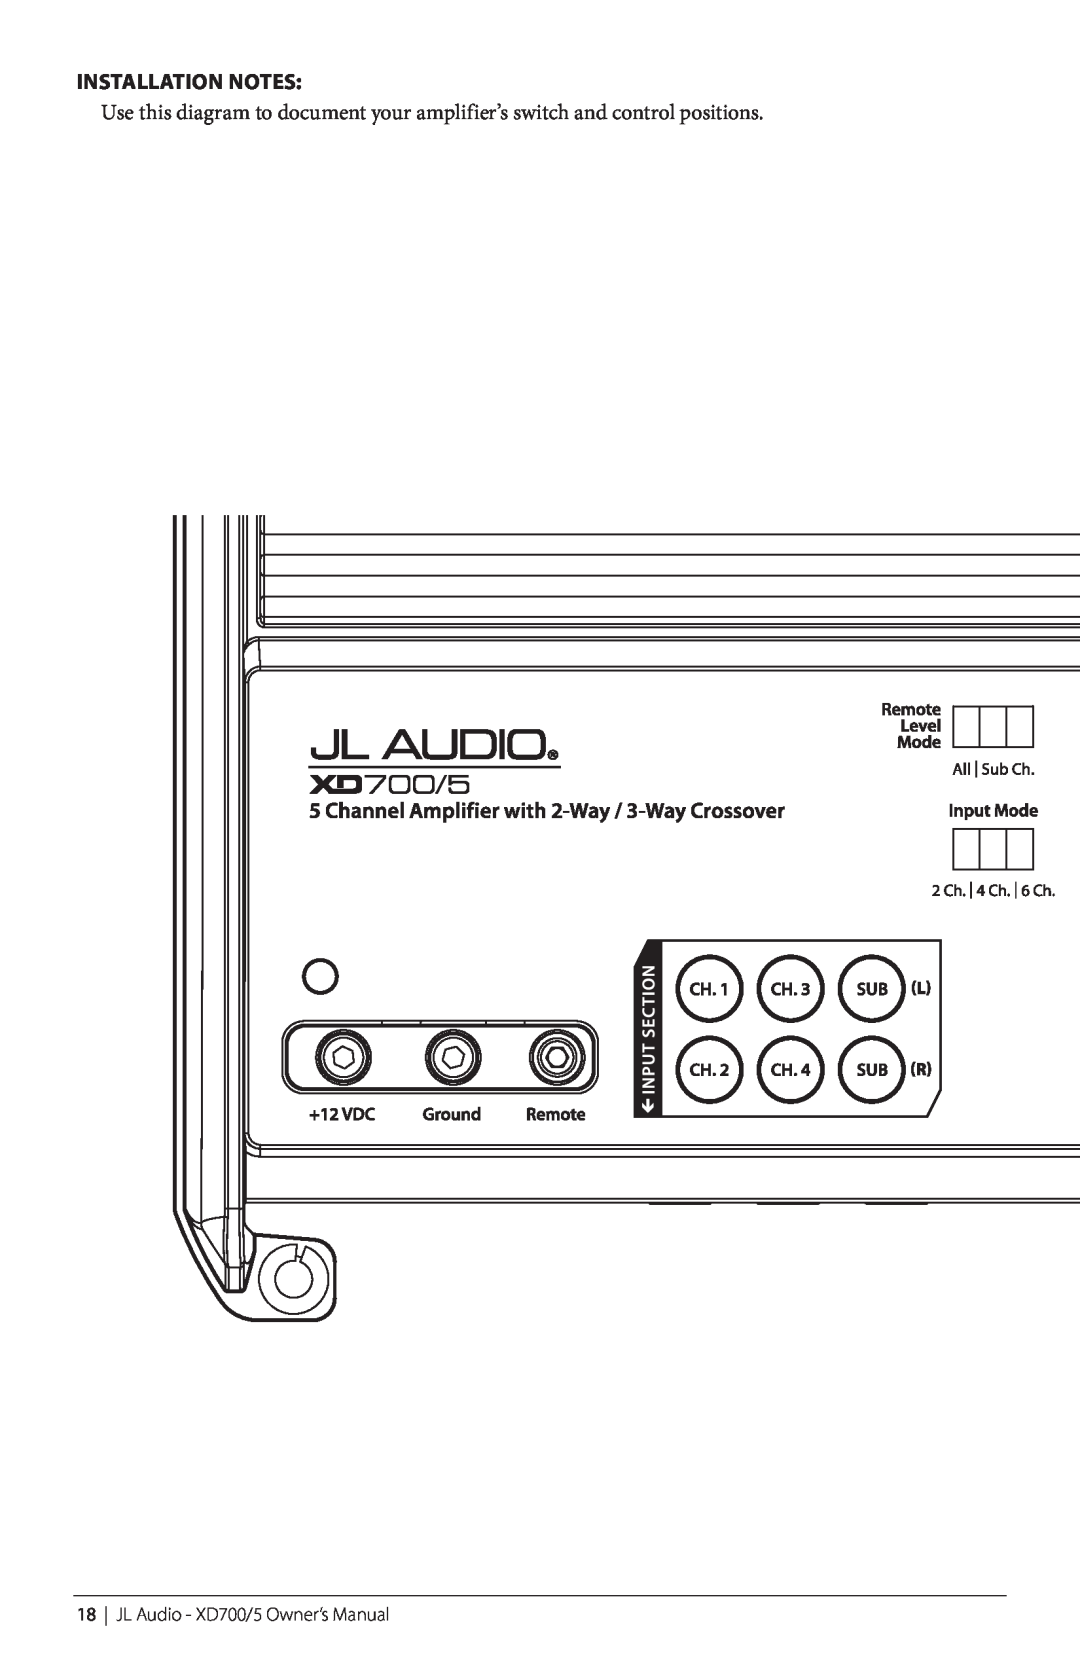 JL Audio owner manual Installation Notes, JL Audio - XD700/5 Owner’s Manual 